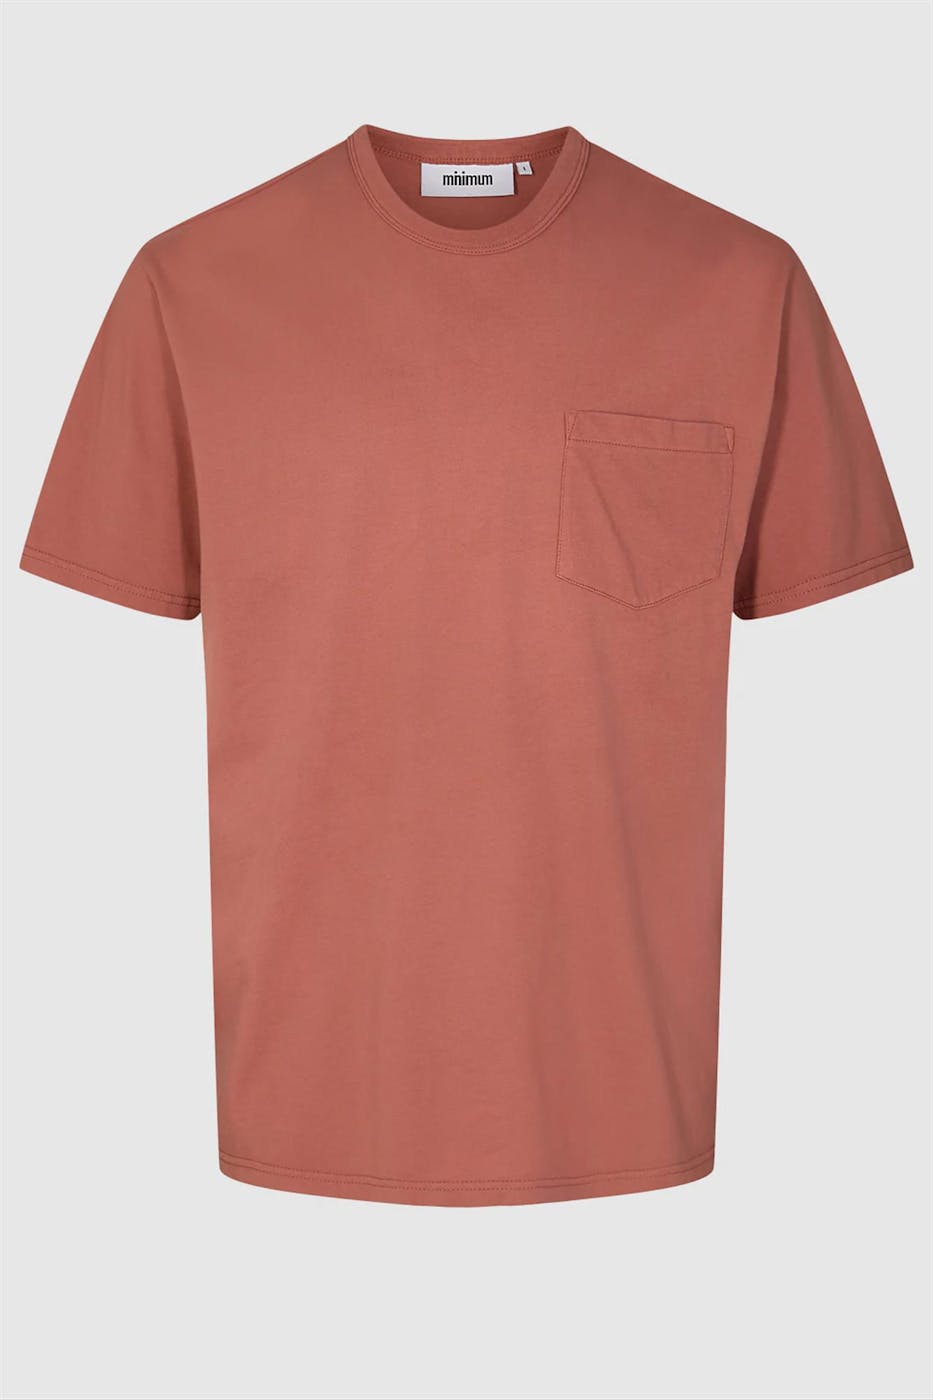 Minimum - Terracotta Haris T-shirt